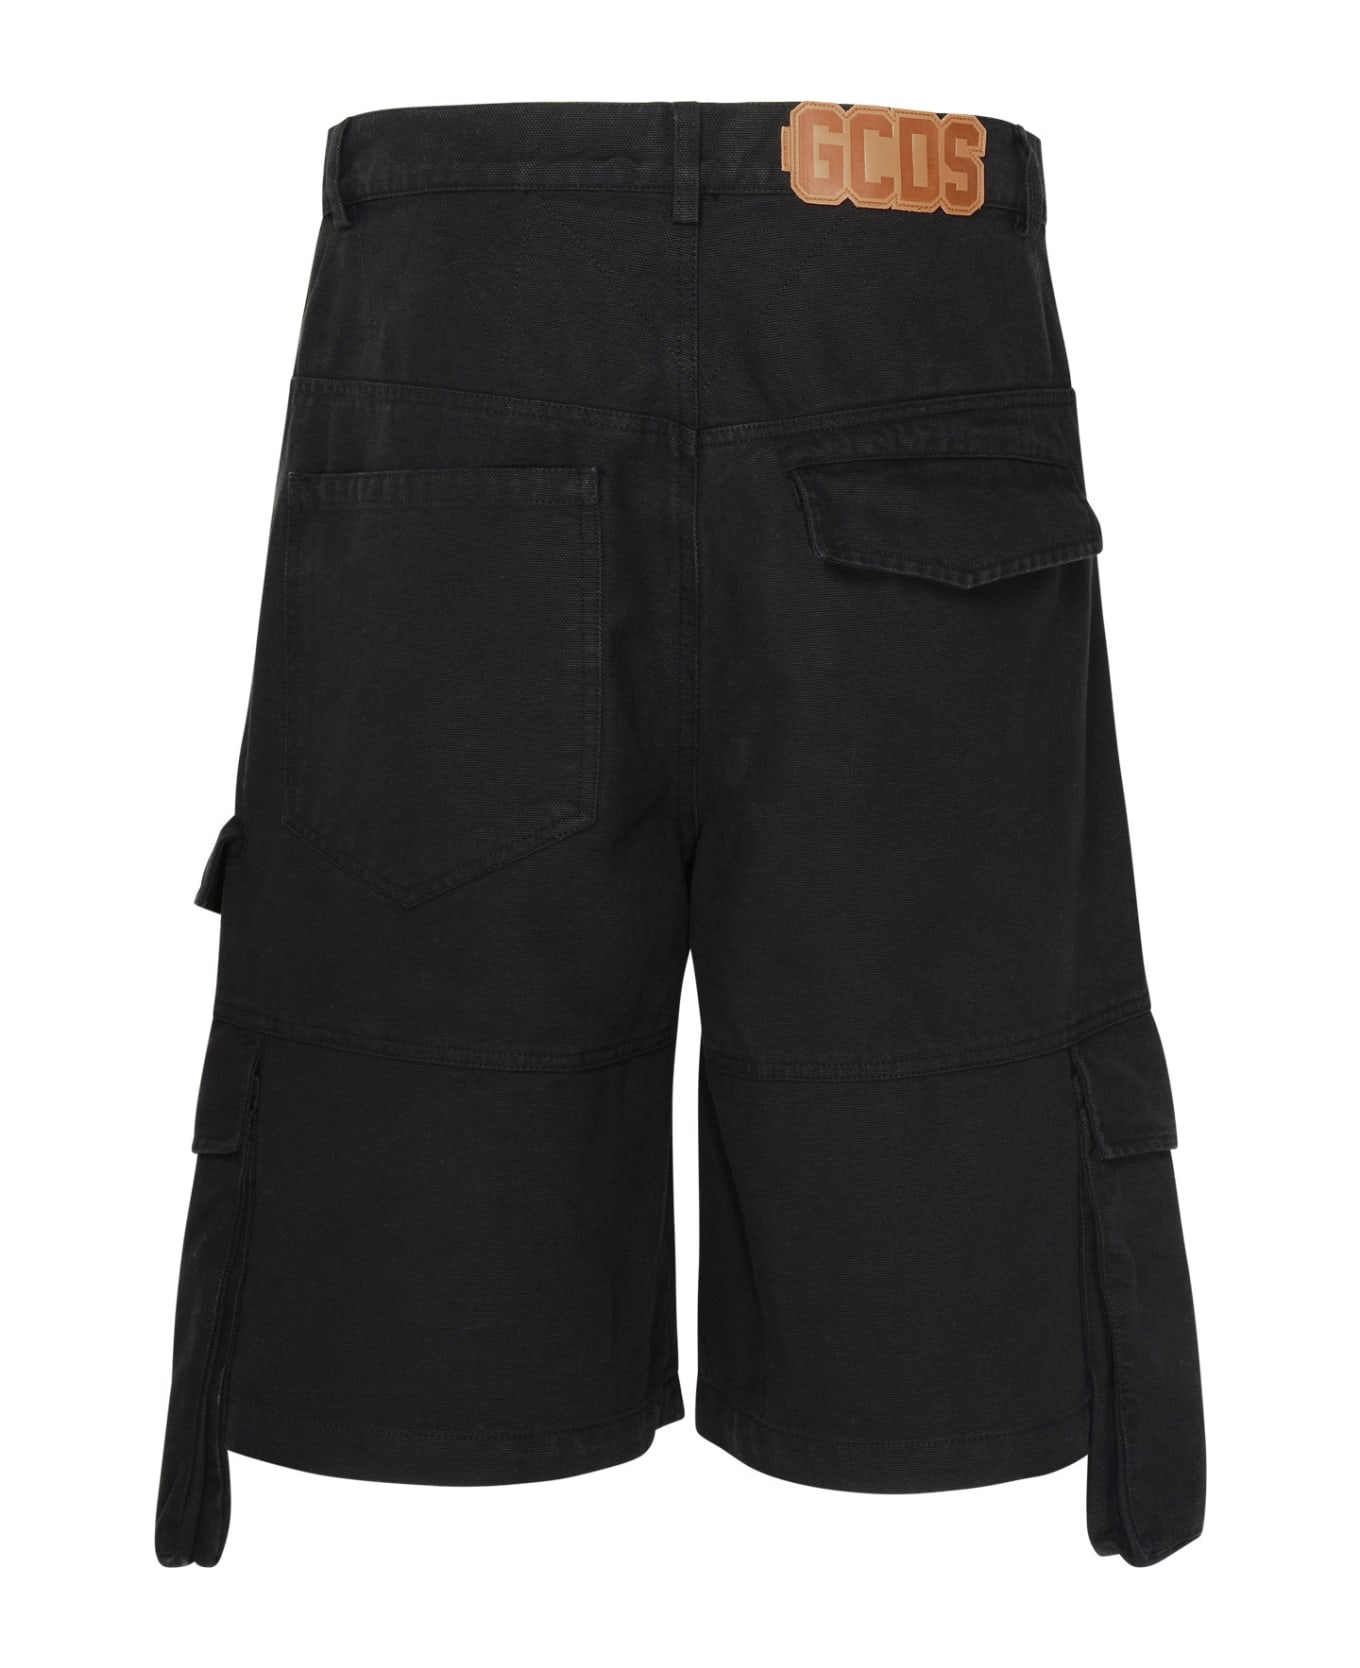 GCDS Black Cotton Bermuda Shorts - Black